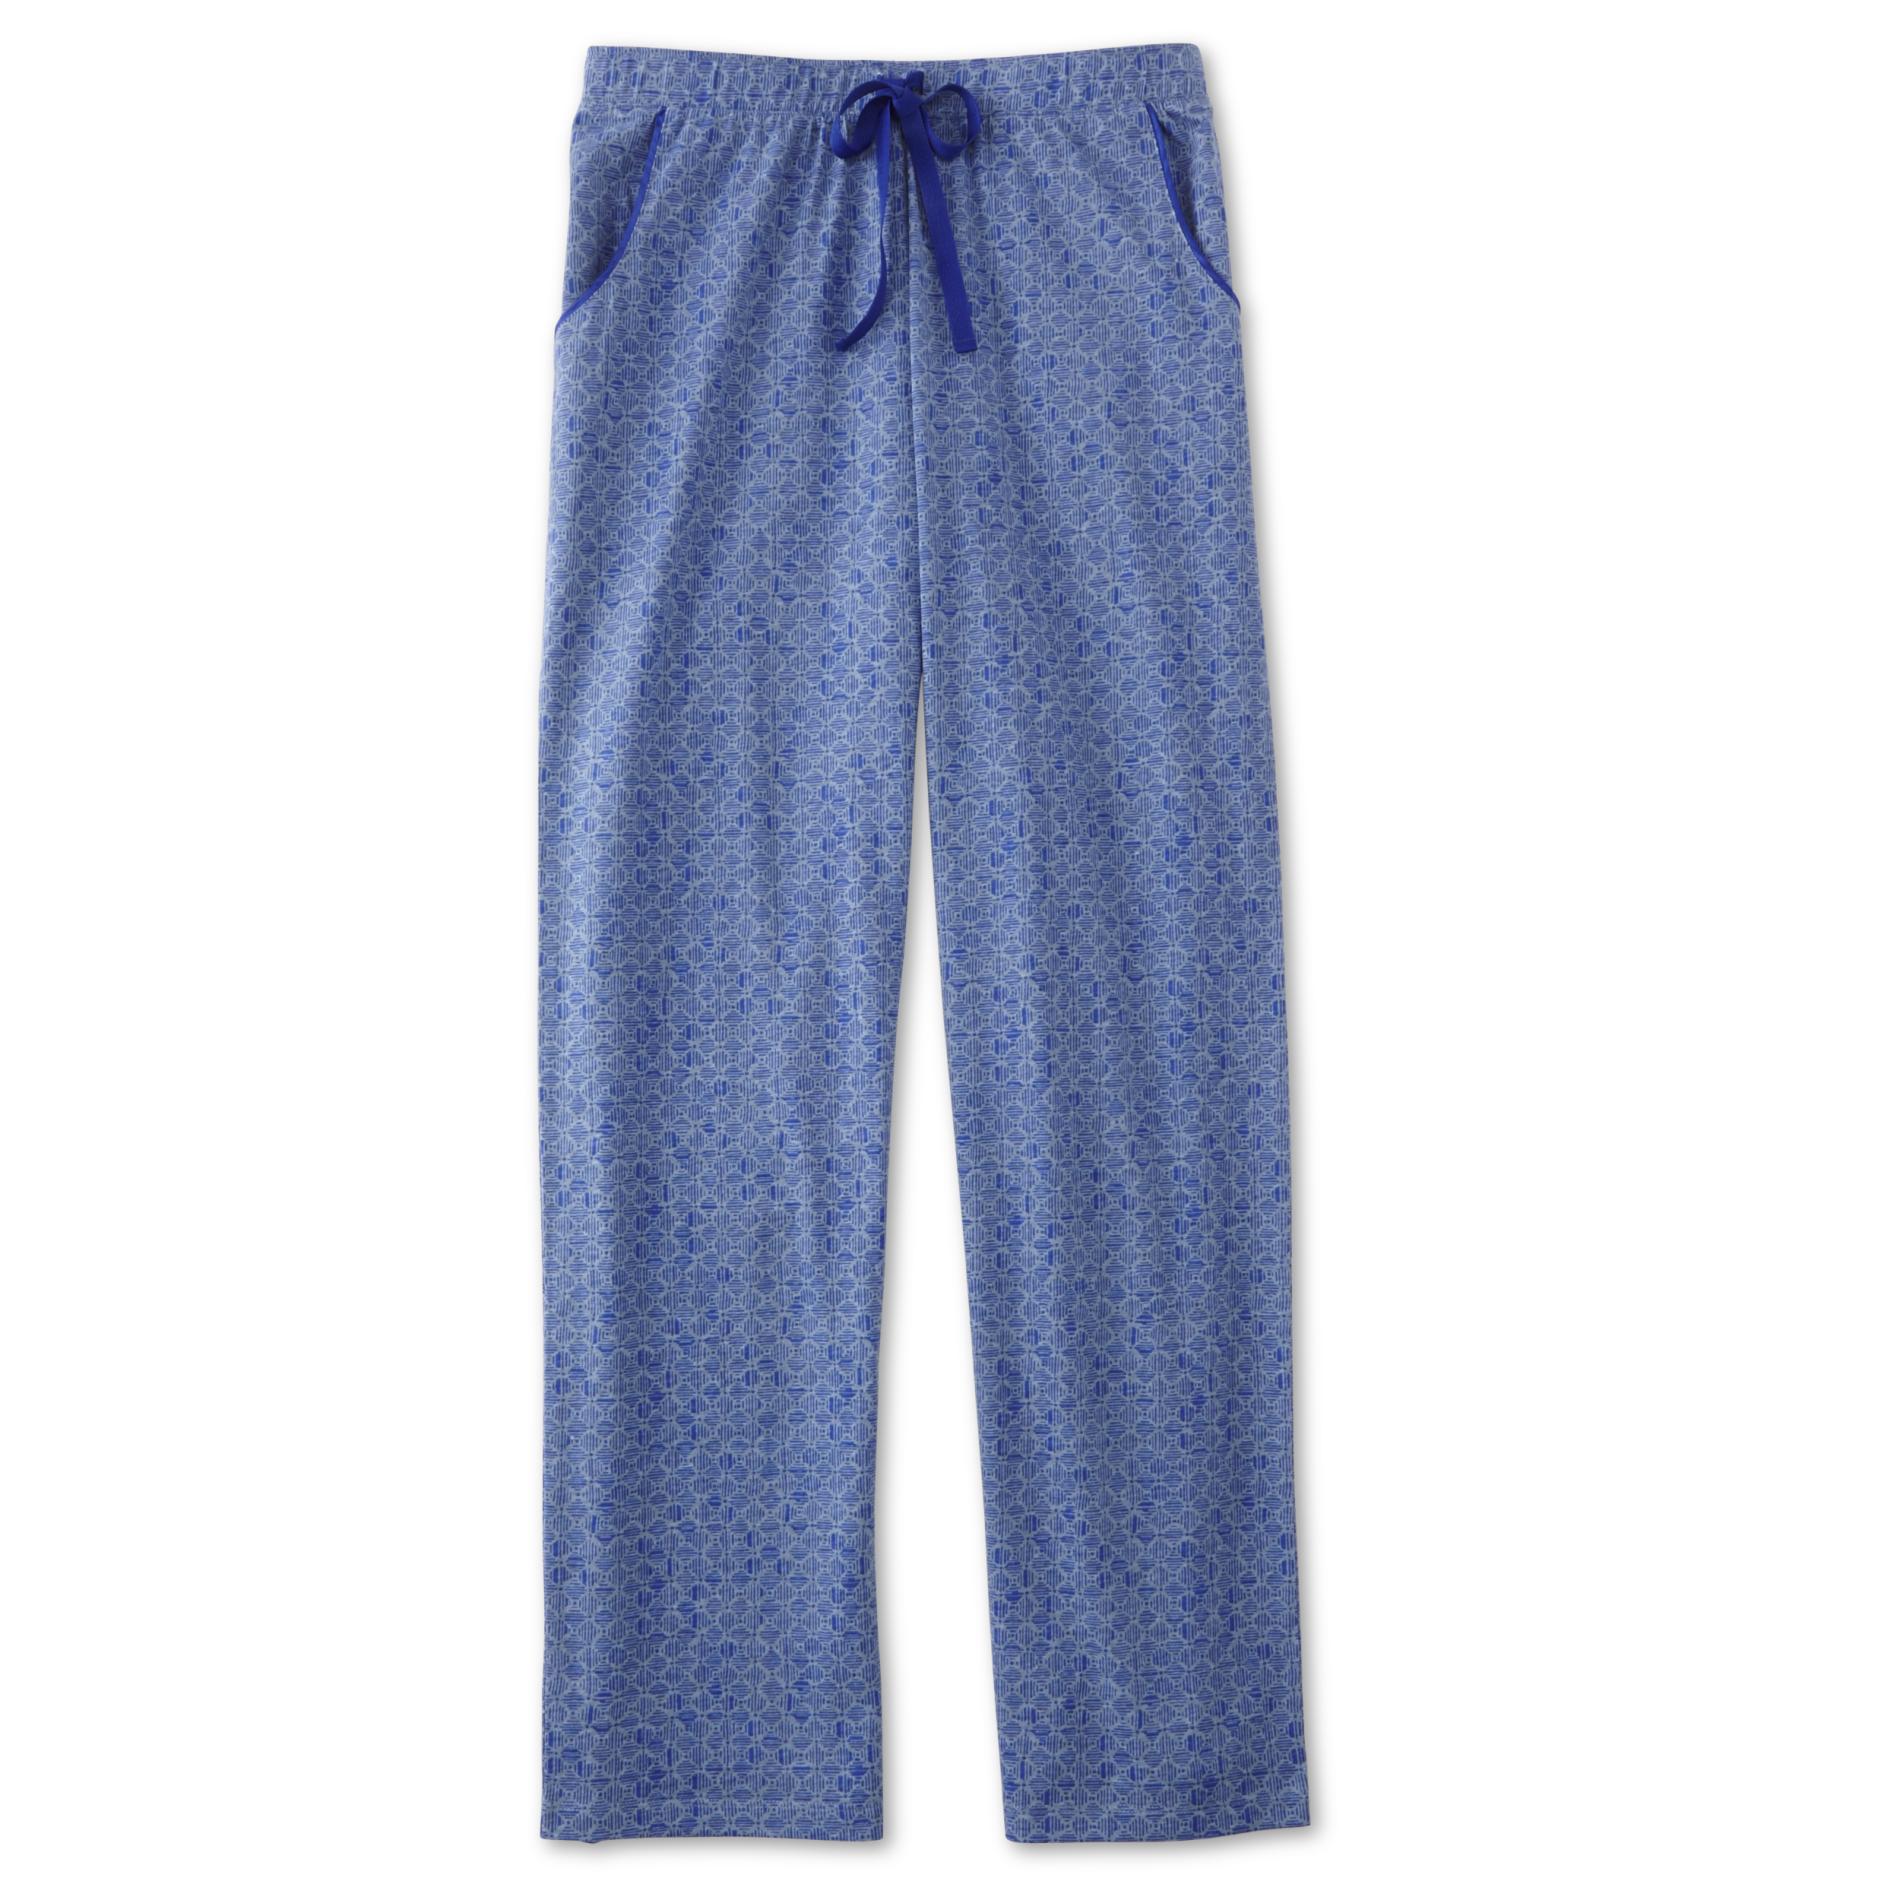 Simply Styled Women's Pajama Pants - Geometric